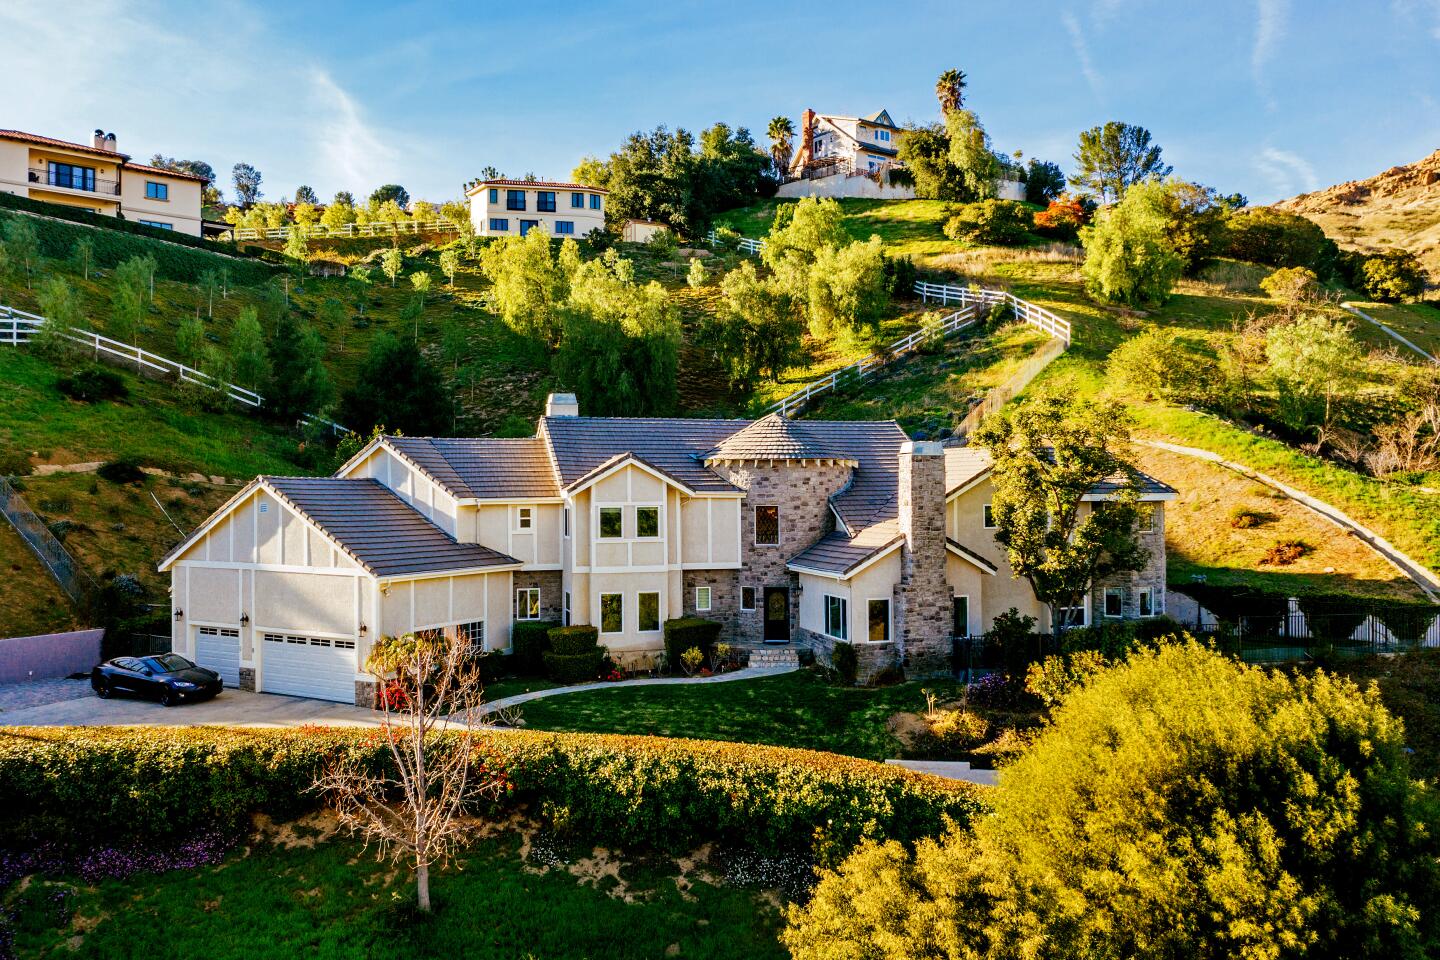 Star Sells LA Estate for $16.7 Million - Where He Keeps